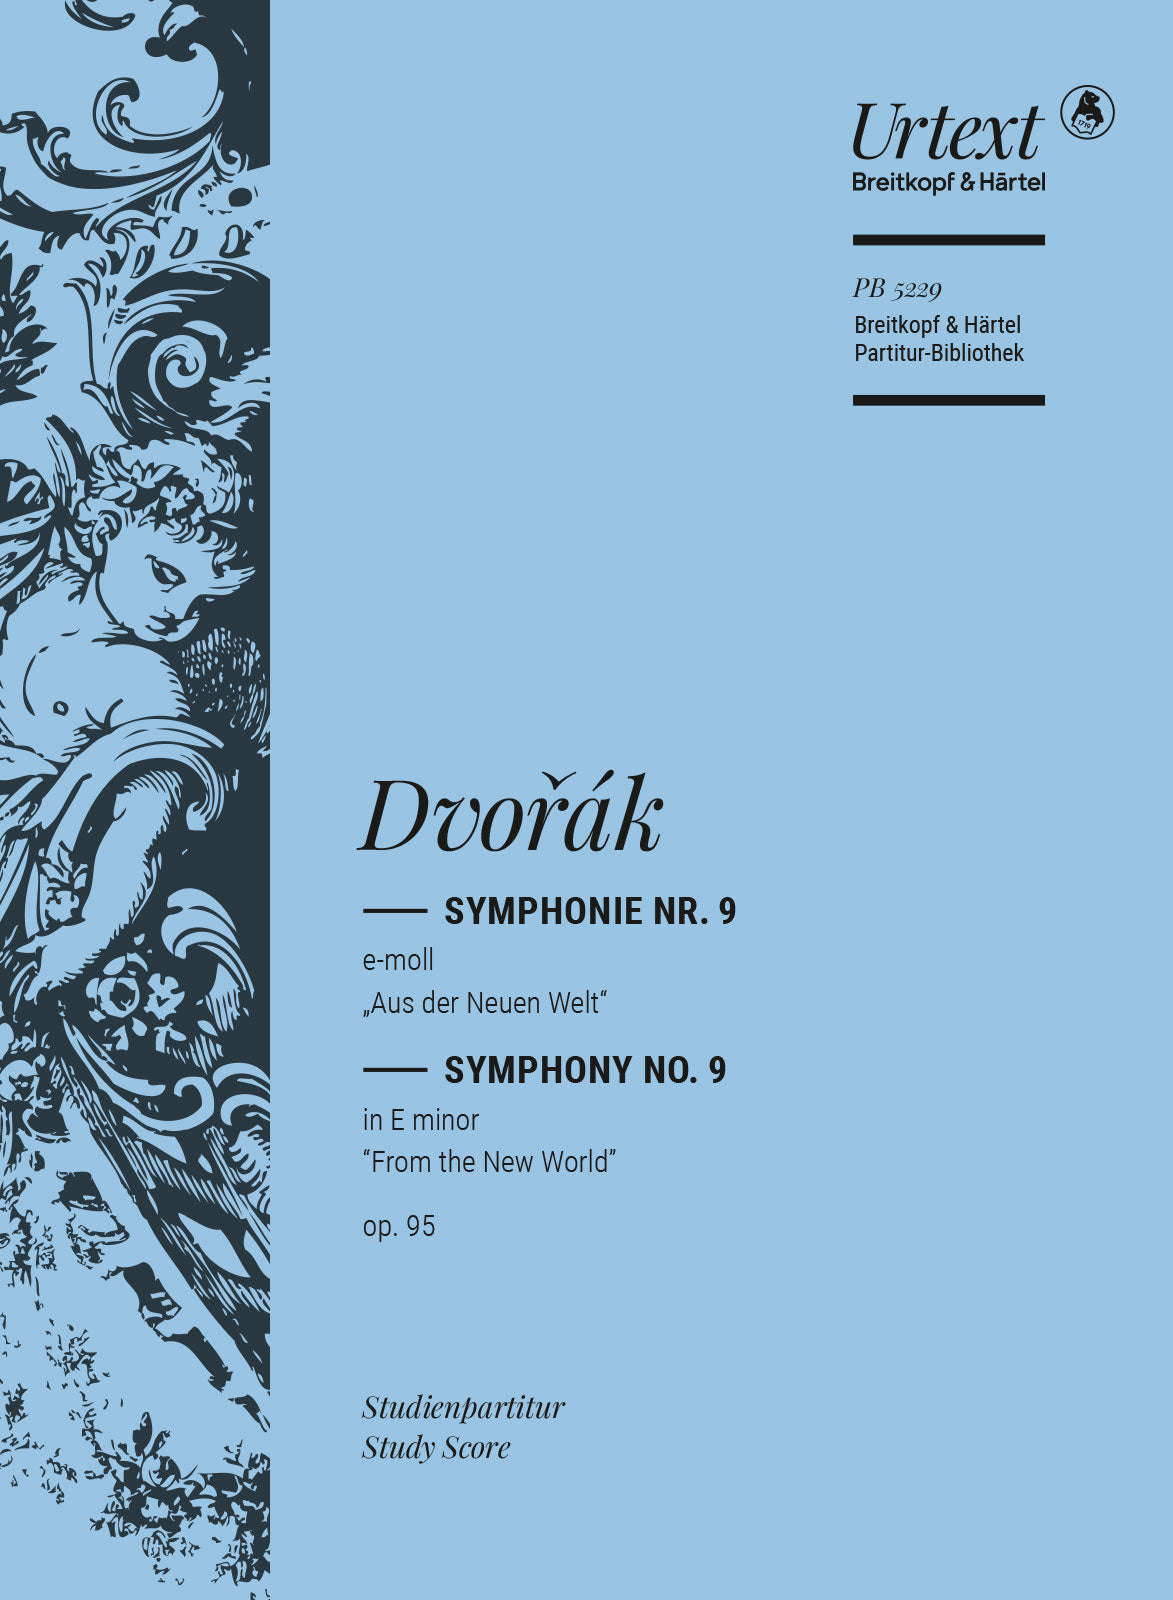 Dvorak Symphony No. 9 in E minor Op. 95 (study score)